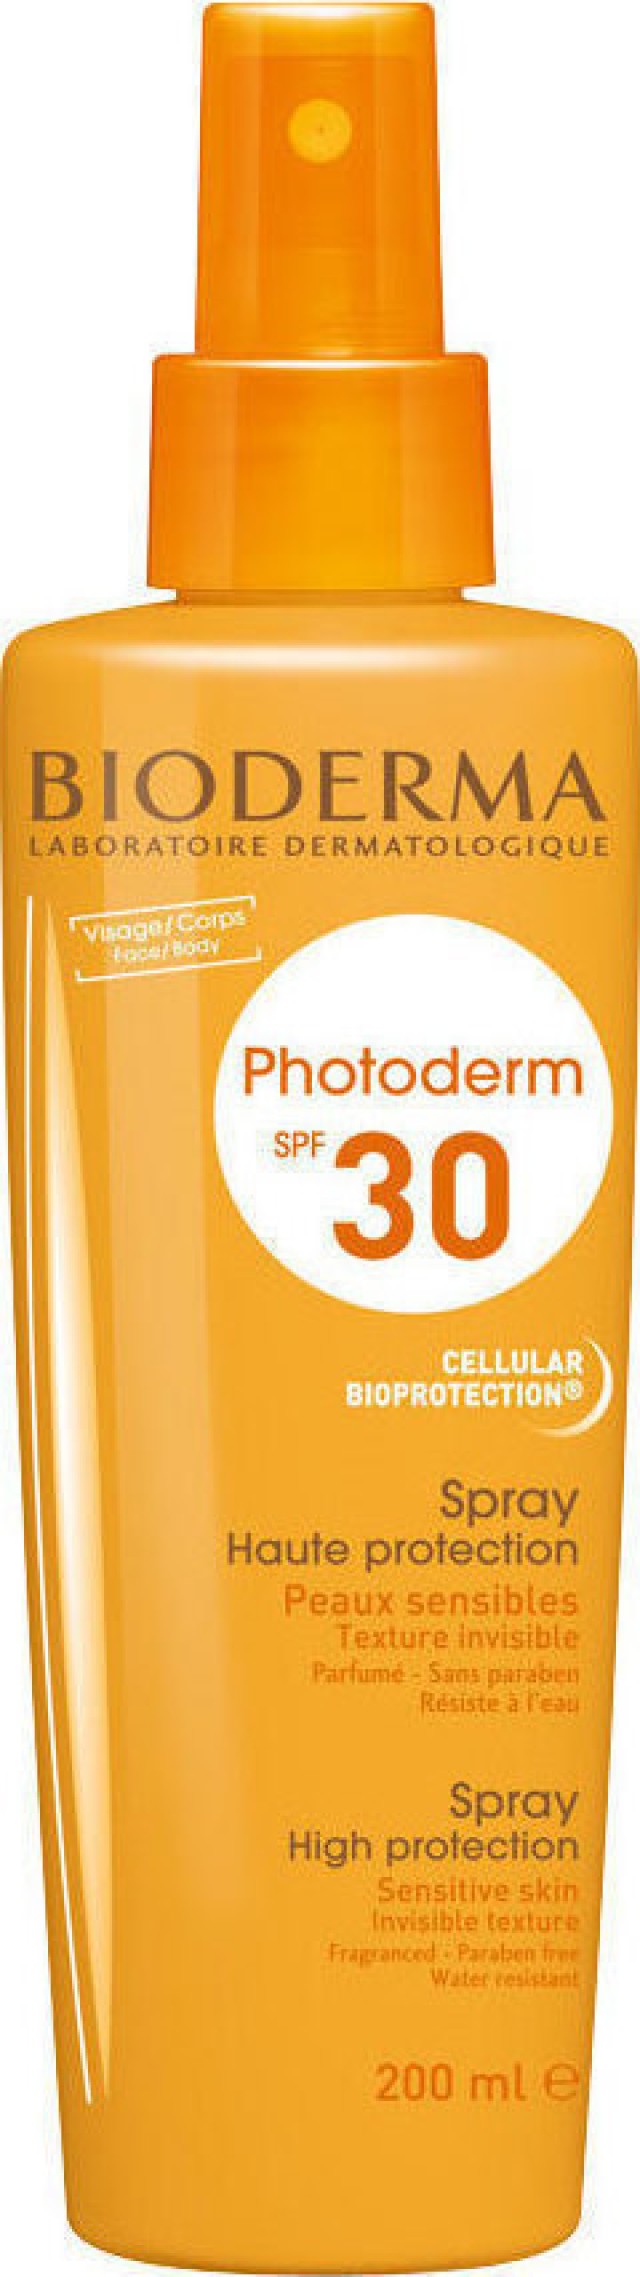 Bioderma Photoderm Spray SPF30 200ml